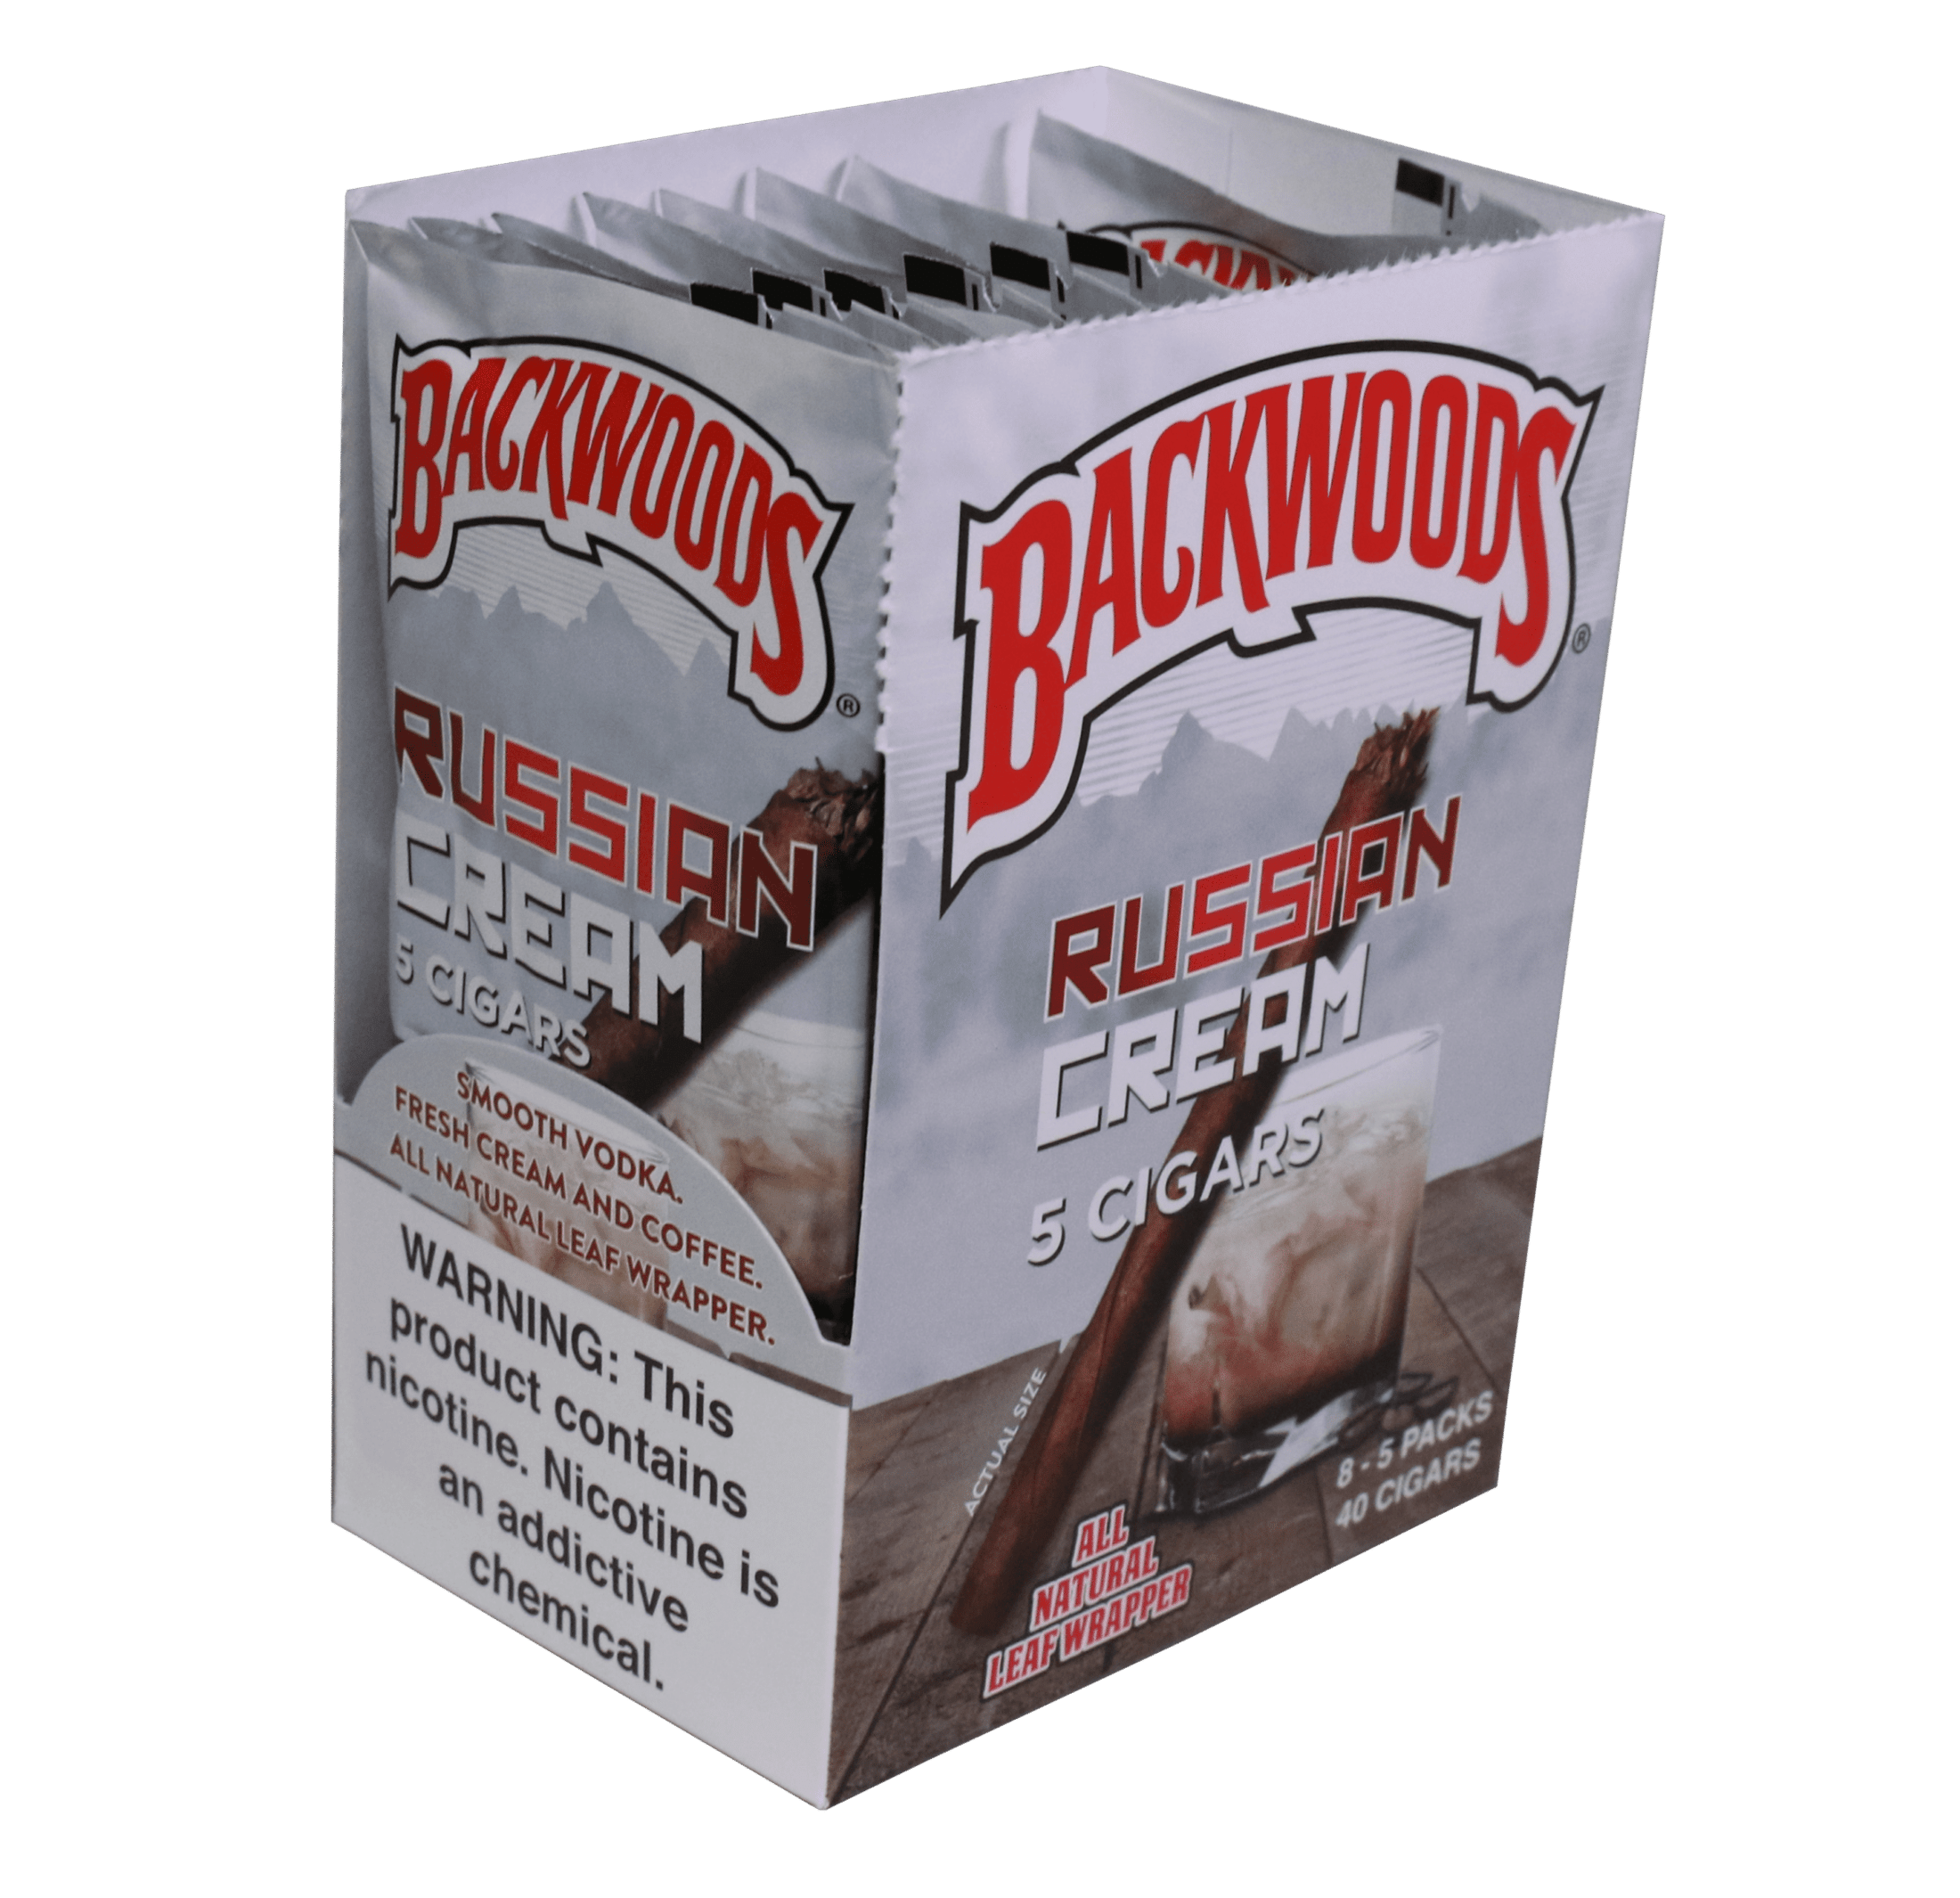 Backwoods Russian Cream 5 pack